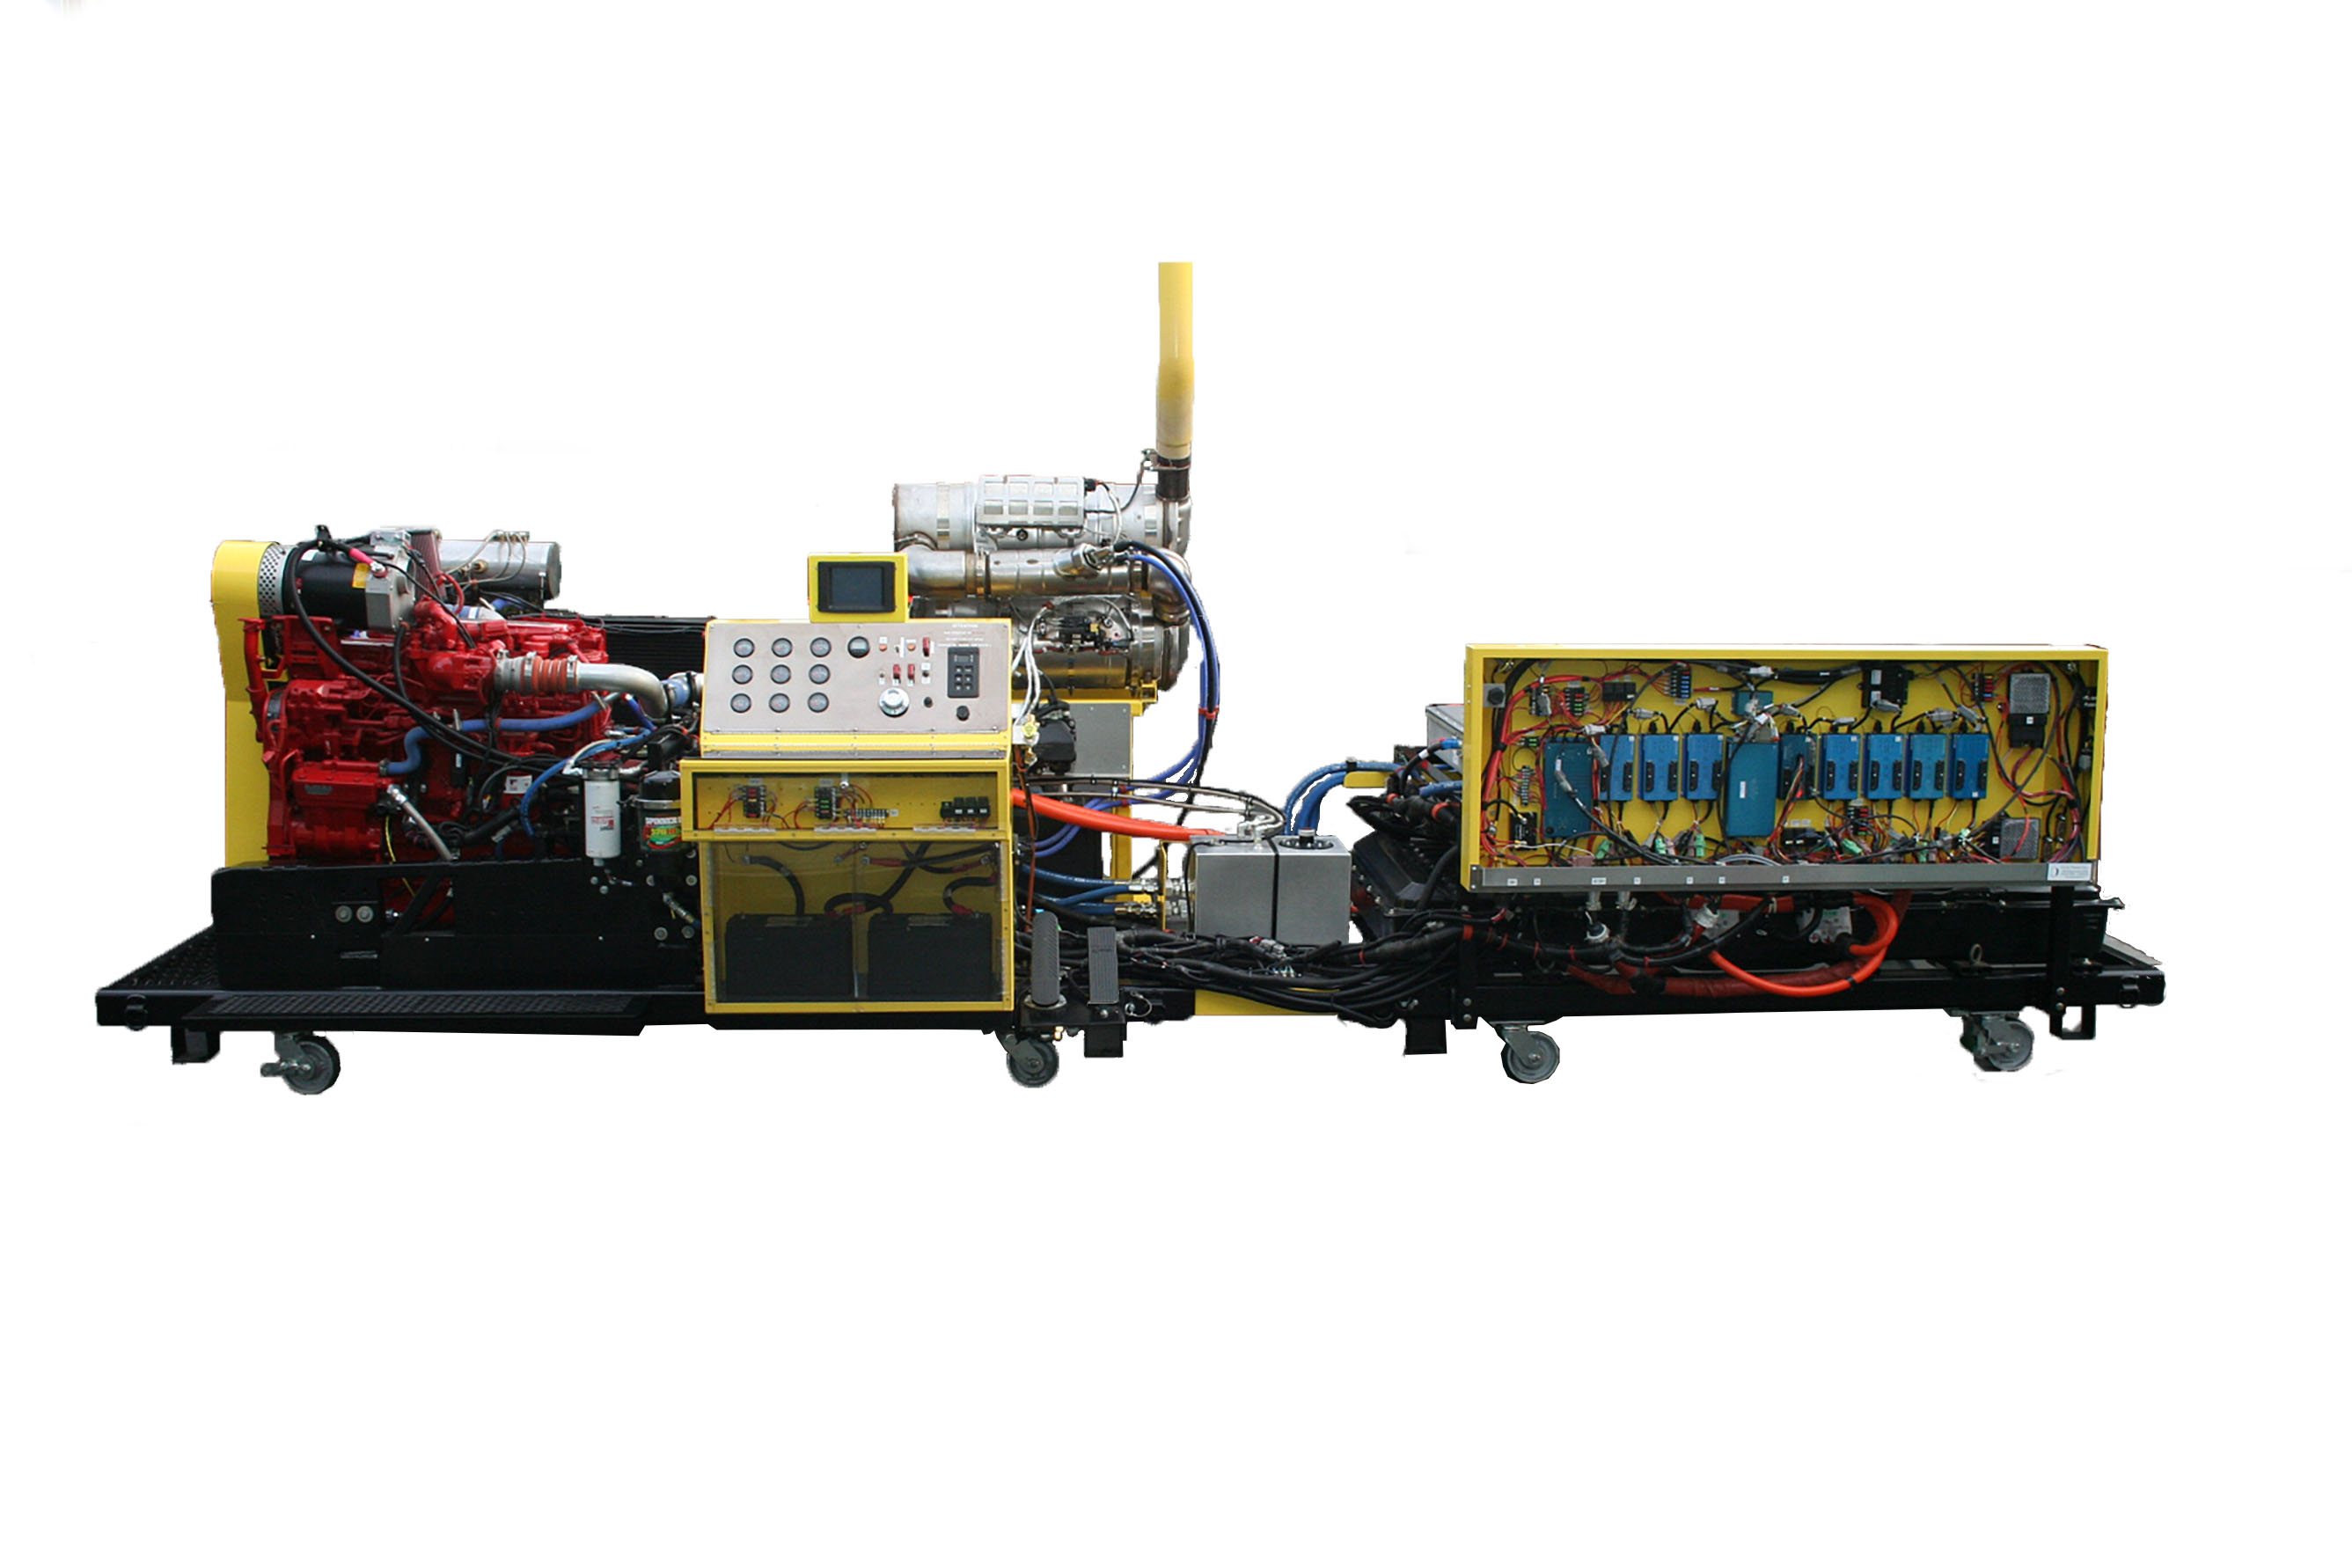 Cummins Diesel Powerplant with Hybrid Battery System